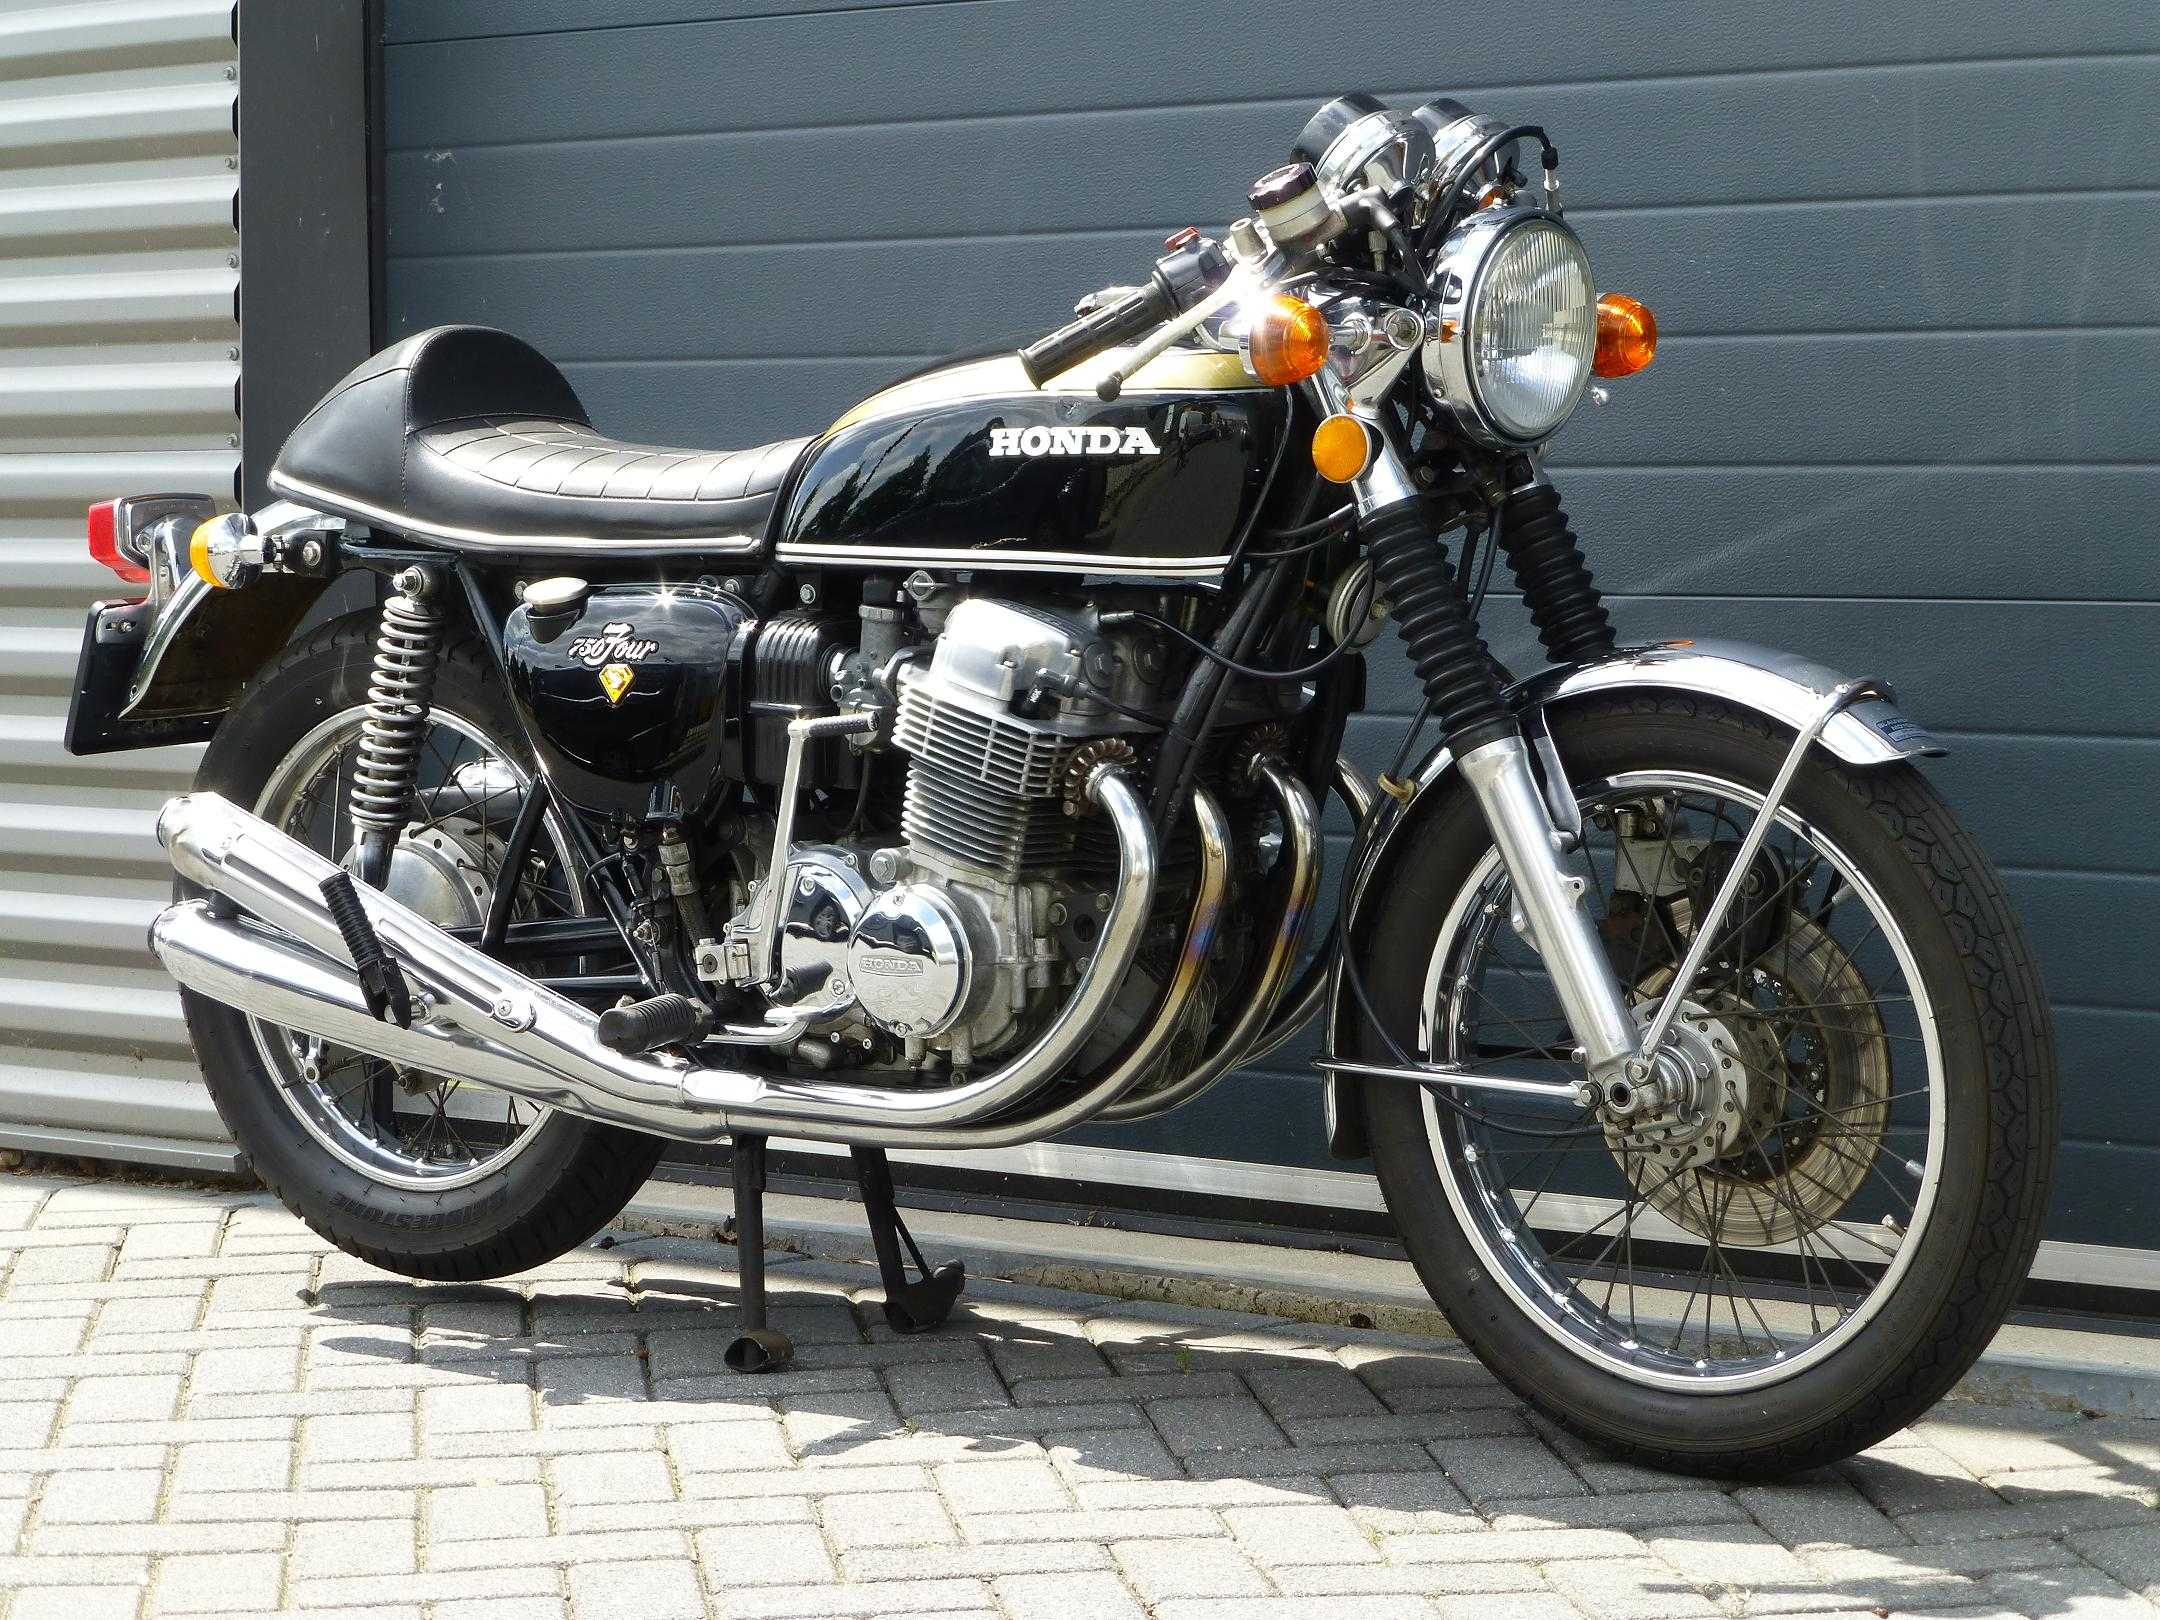 Мотоцикл honda cb 750 k7 - кастом версия легендарного мотоцикла на фото | хонда сб 750 - характеристики, свойства, особенности